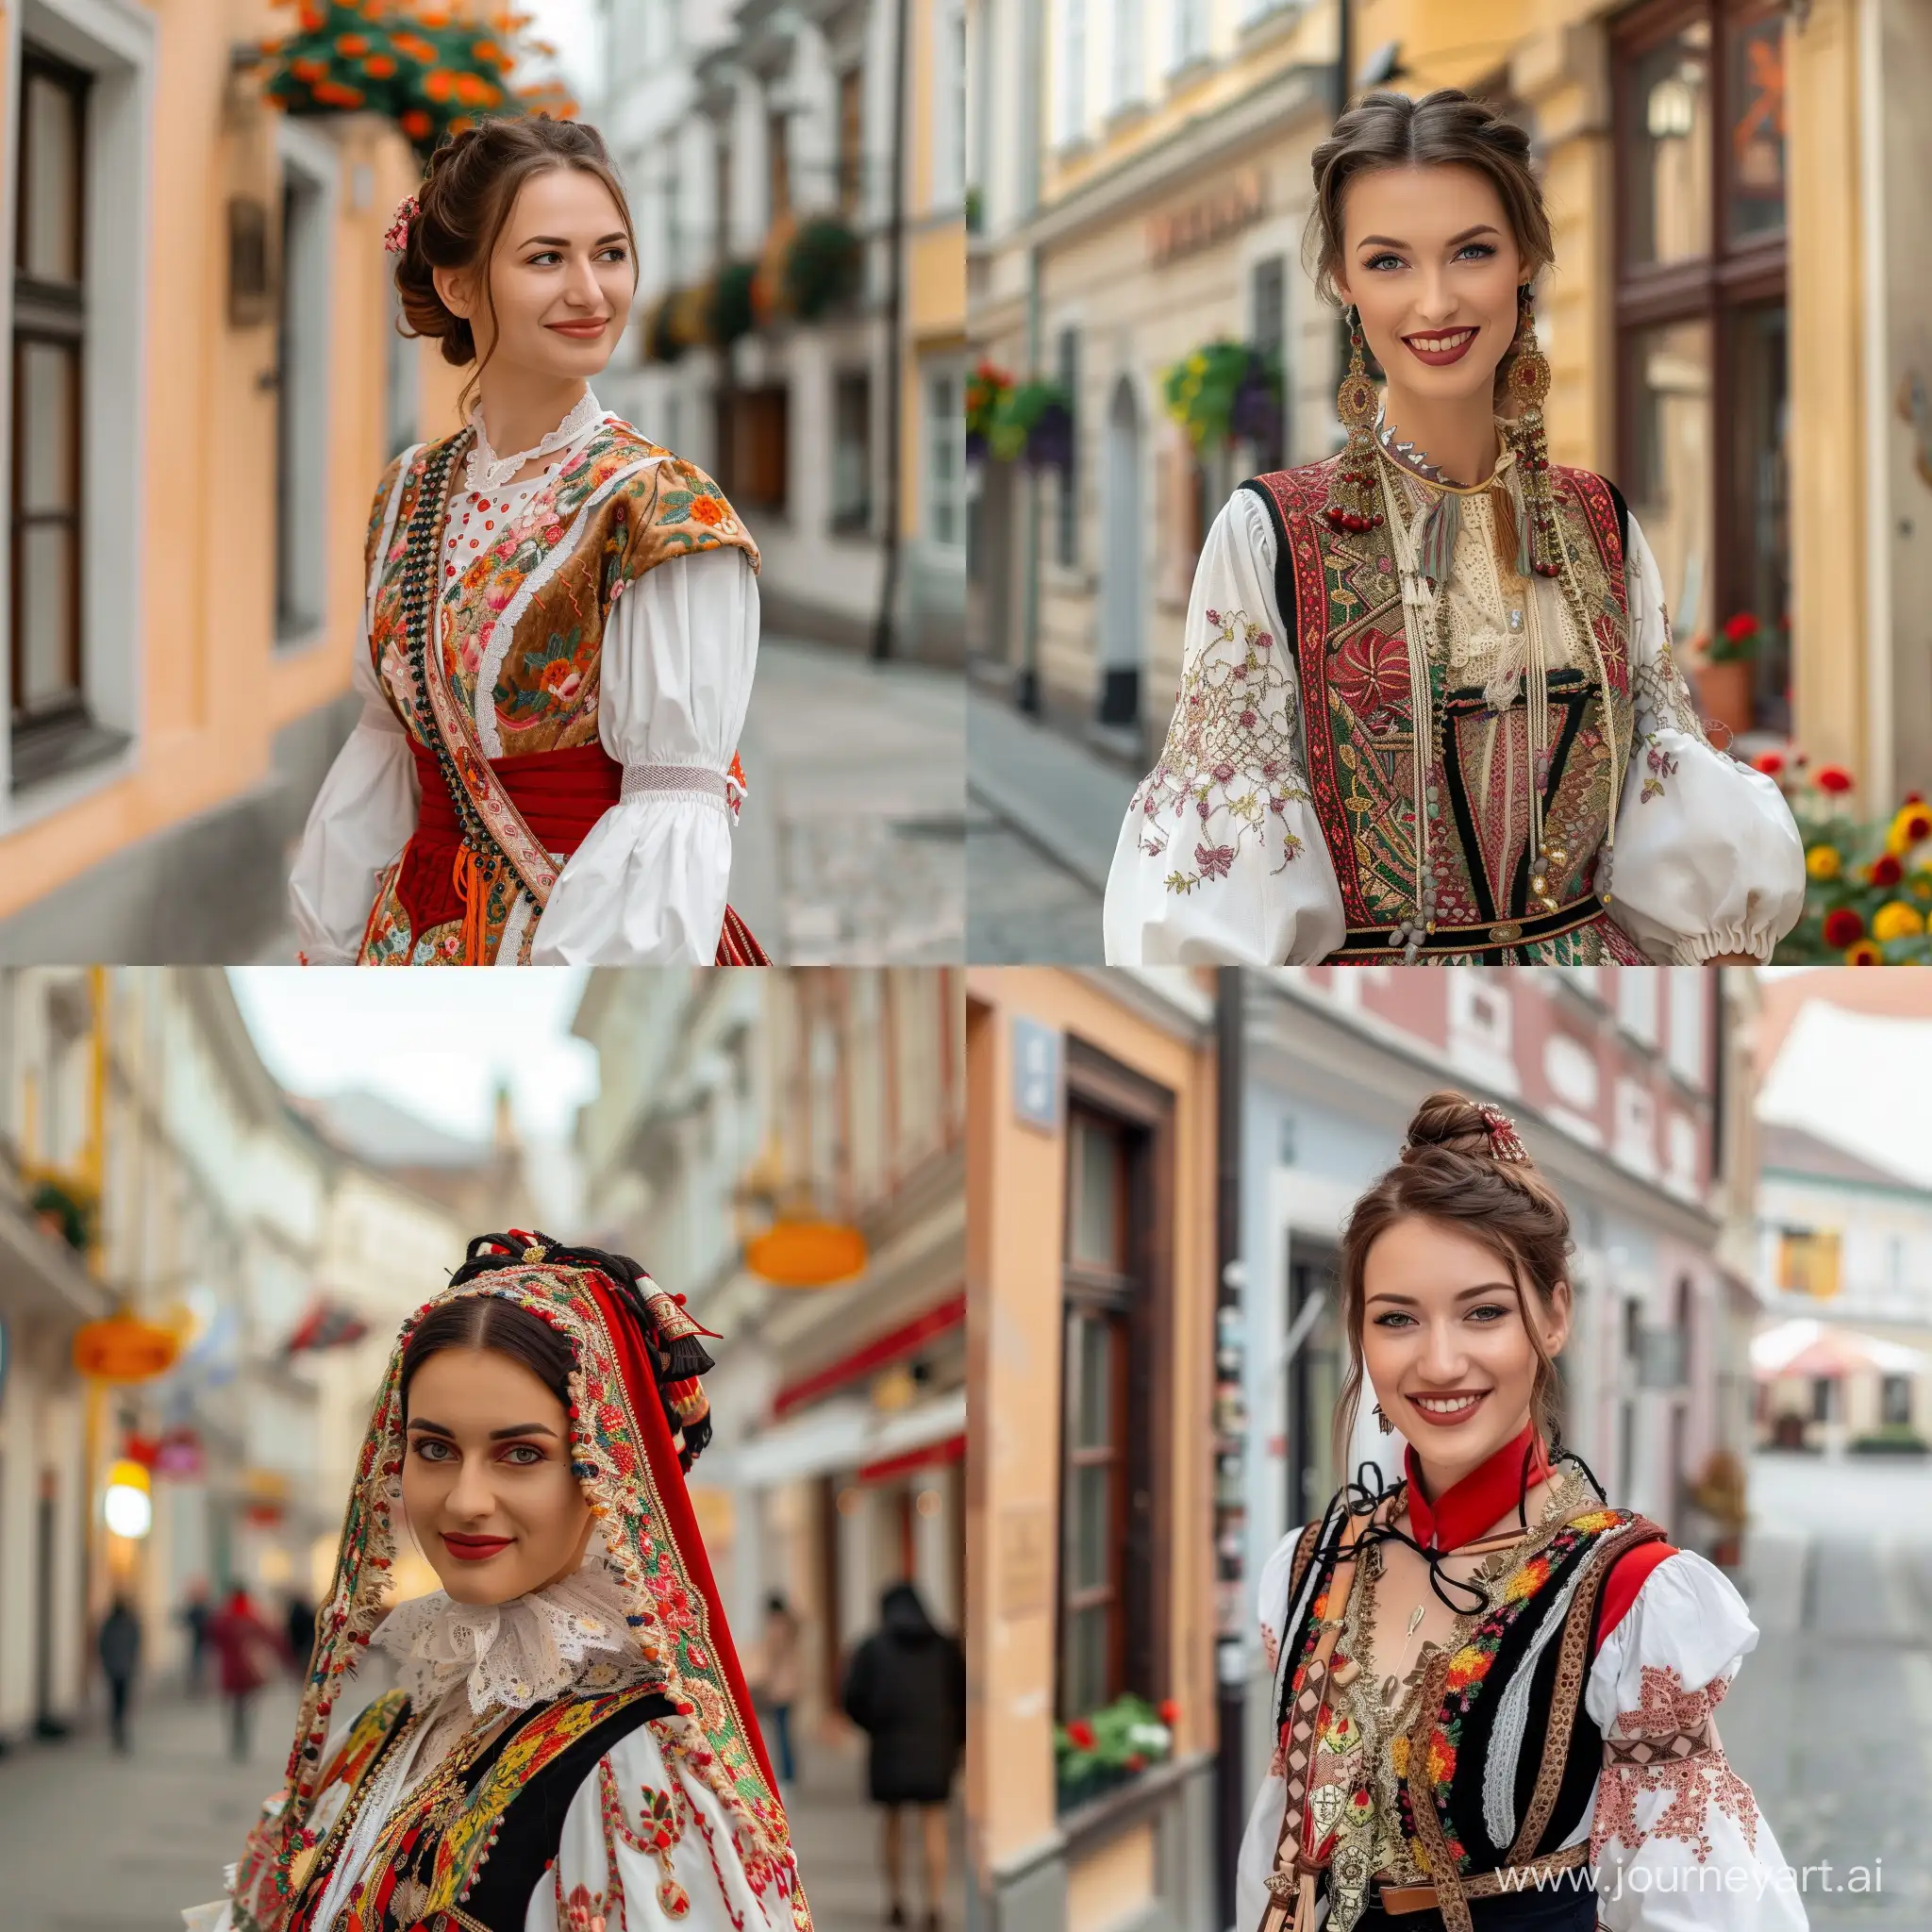 Stunning-Woman-in-Traditional-Vienna-Costume-on-Vienna-Street